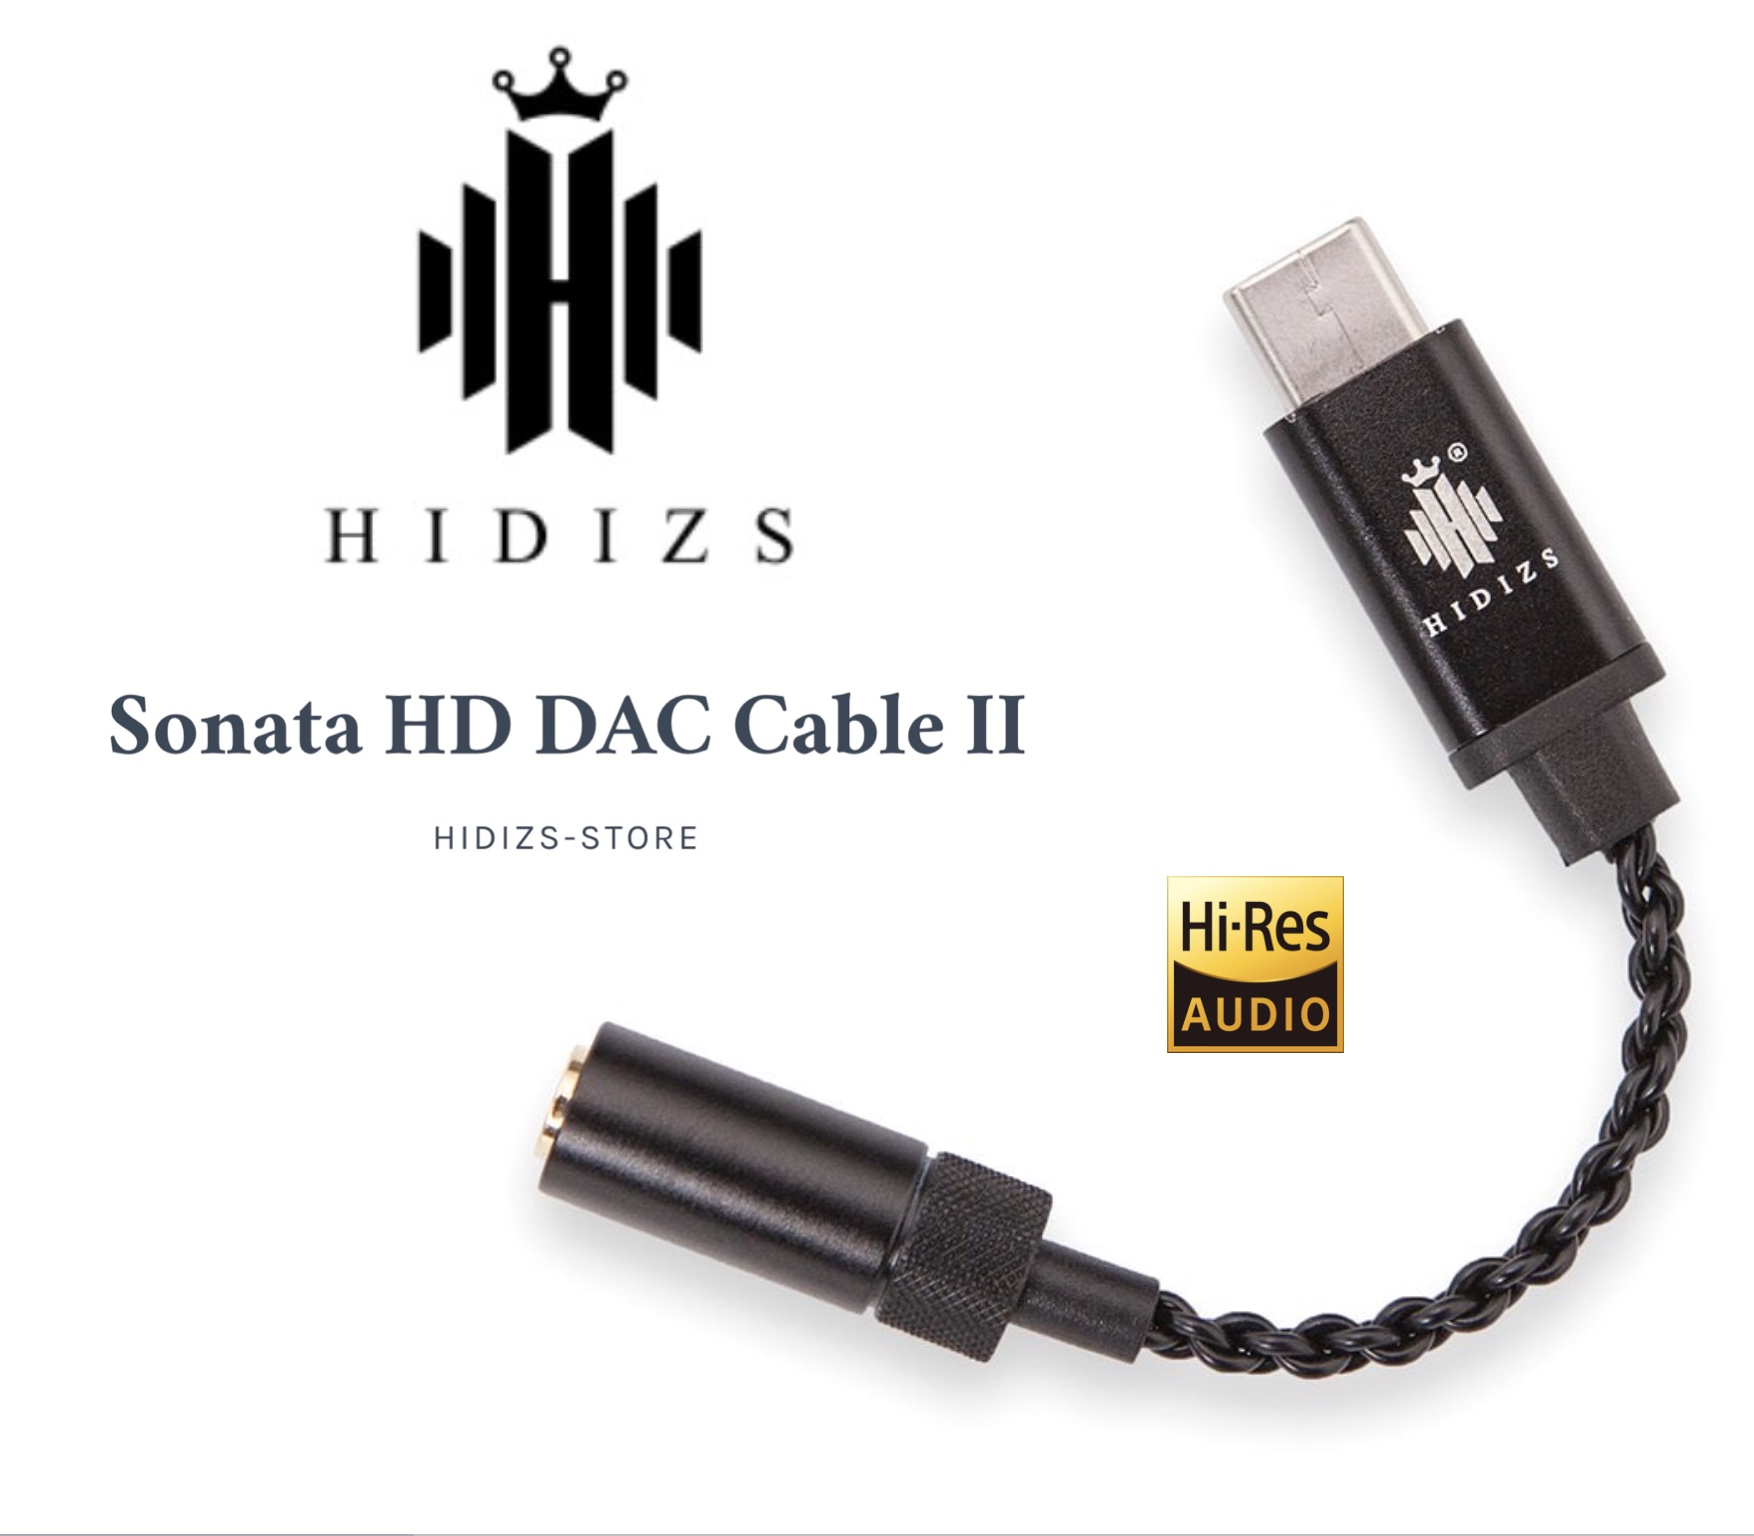 Hidizs Sonata HD DAC